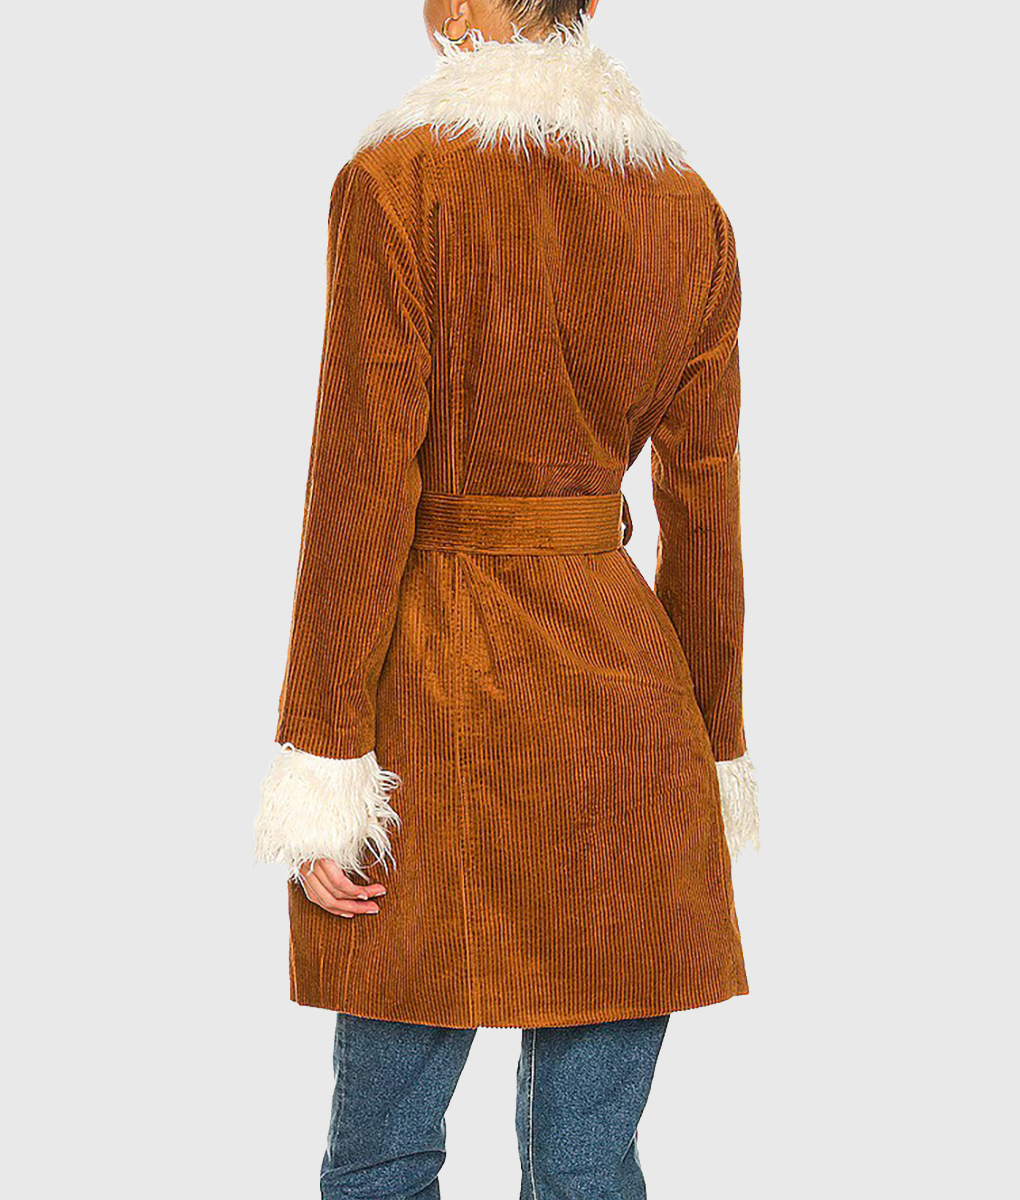 Nicola Coughlan Big Mood Suede Leather Brown Fur Coat (2)